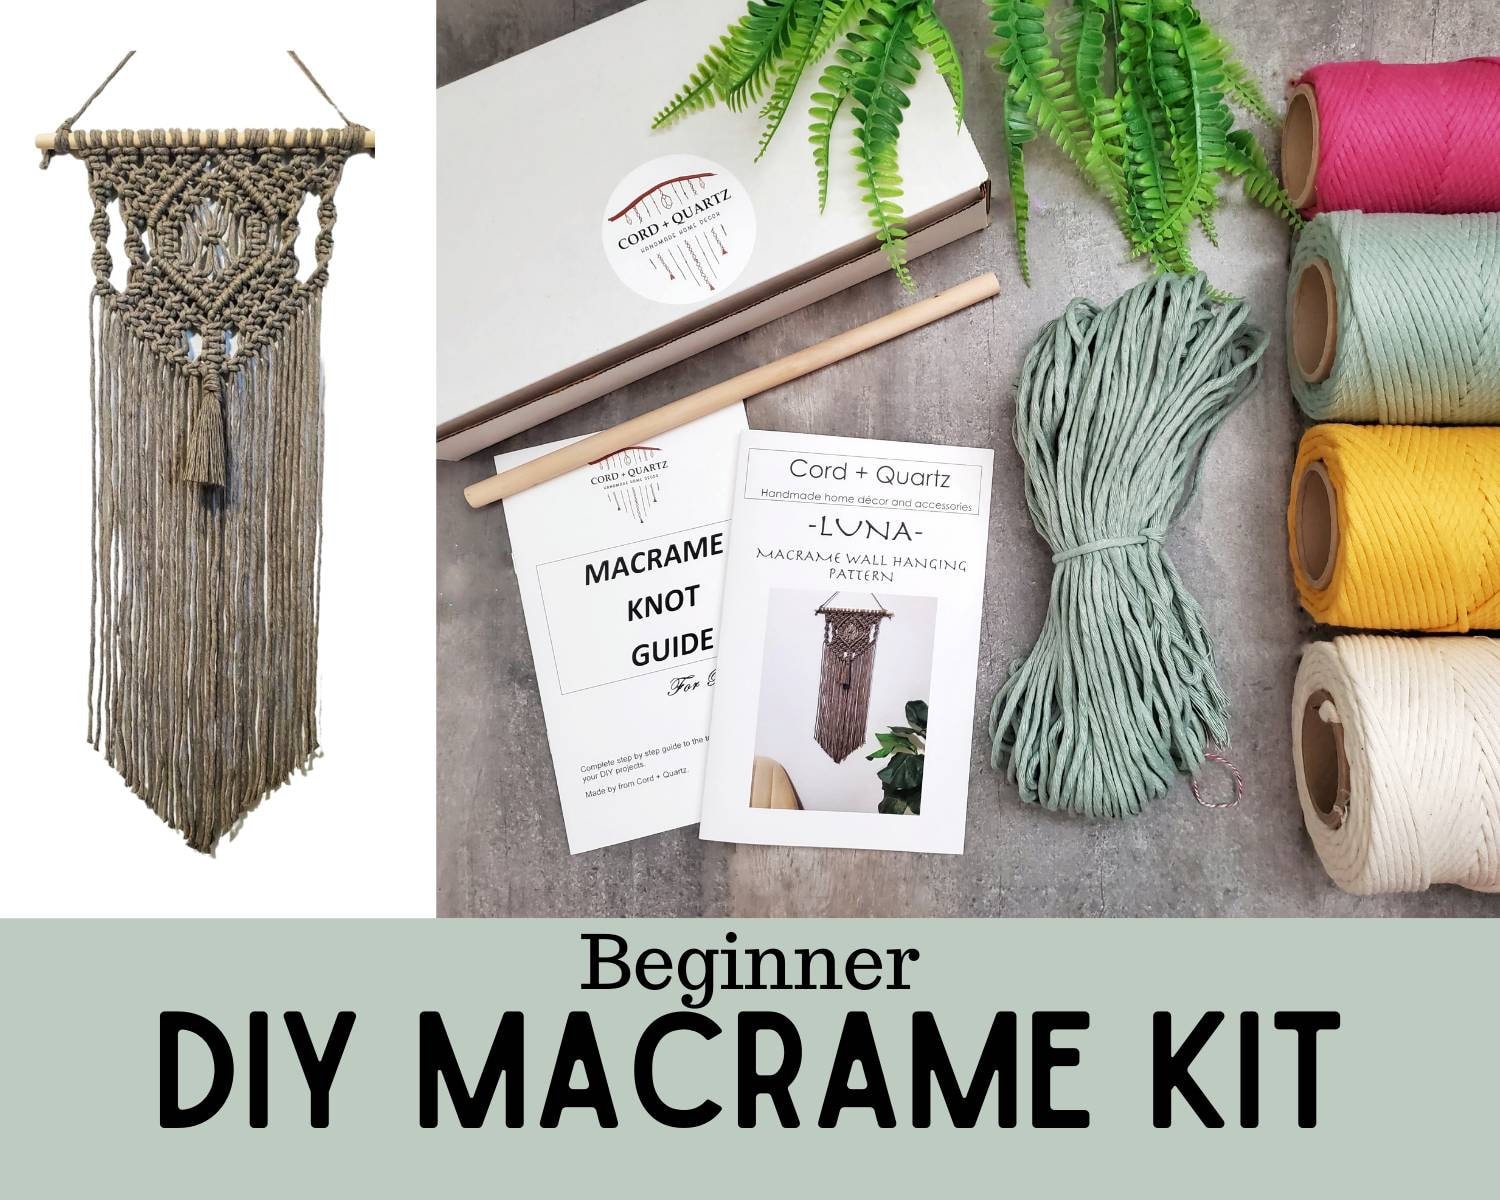 Beginner macrame wall hanging kit. Macrame diy pattern for beginners. Craft kits for adults and kids. Bohemian home decor diy kit